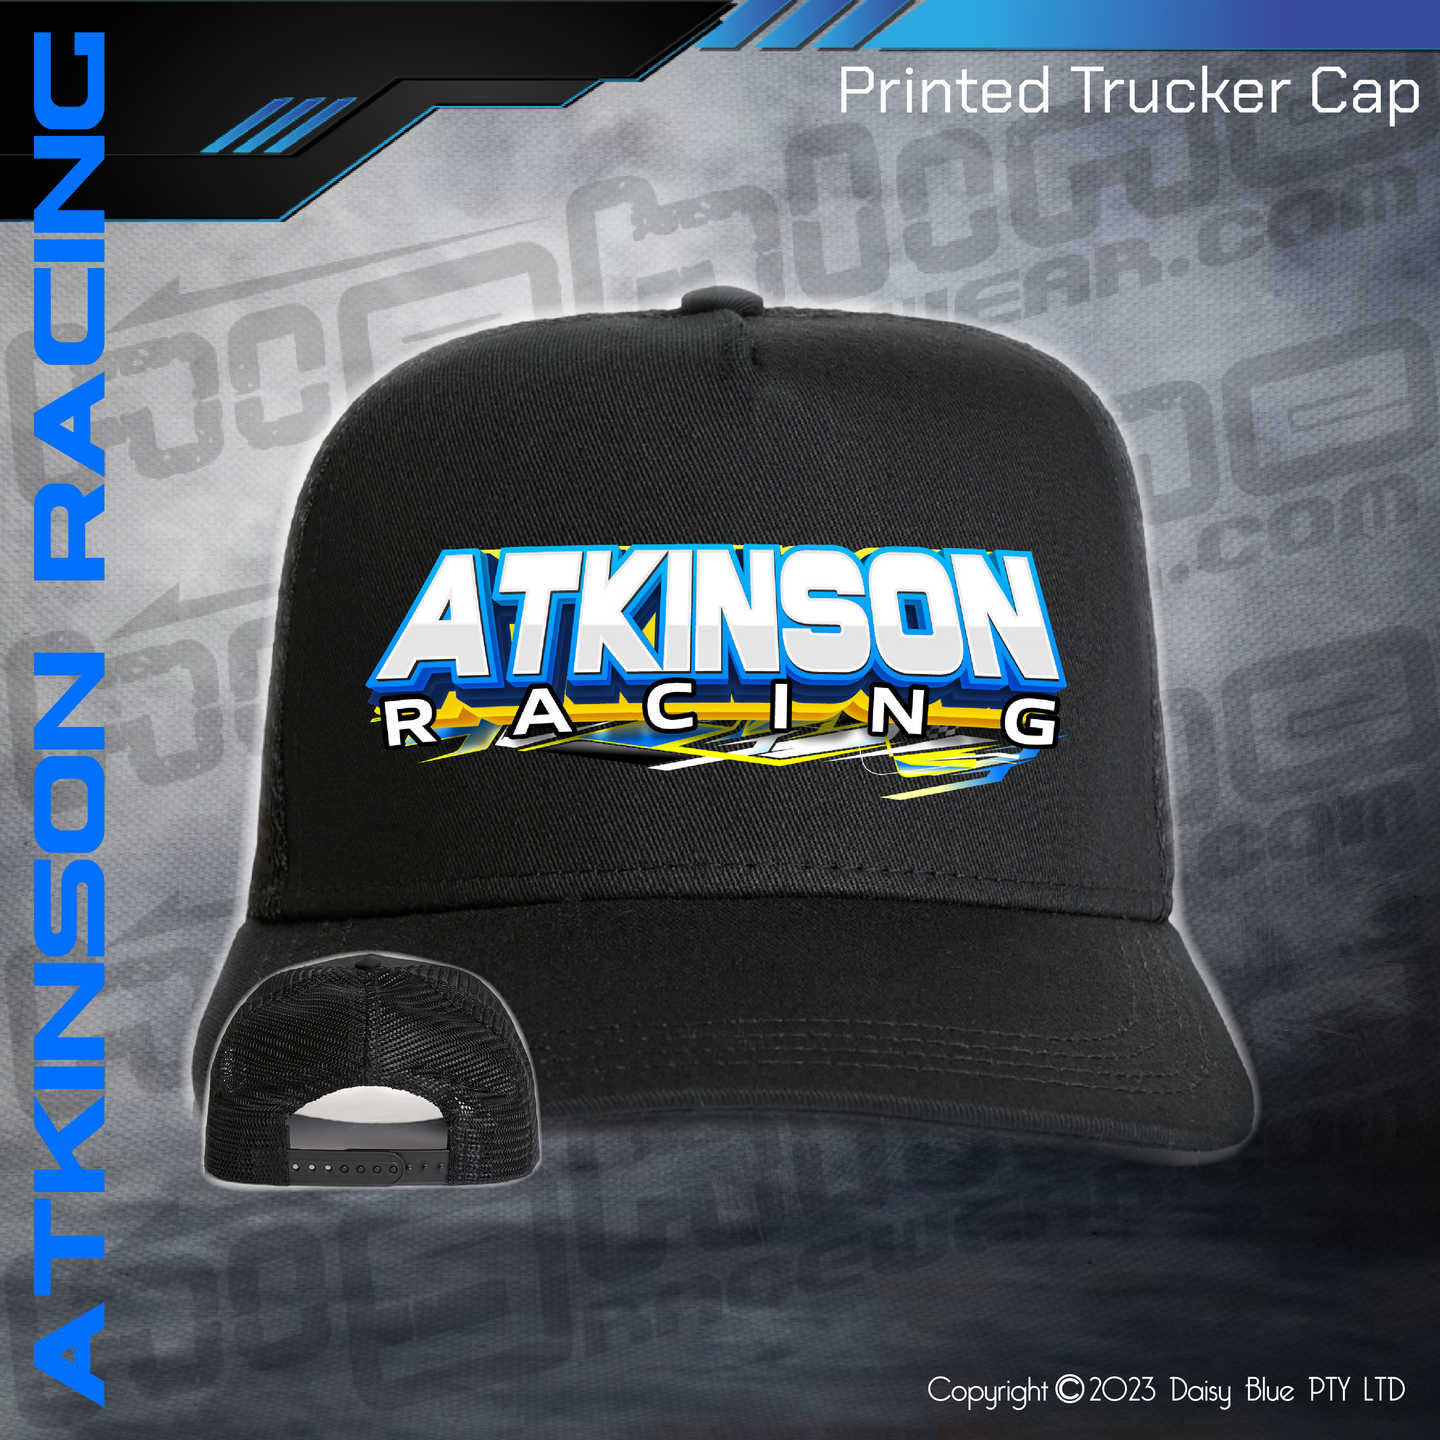 Printed Trucker Cap -  Atkinson Racing